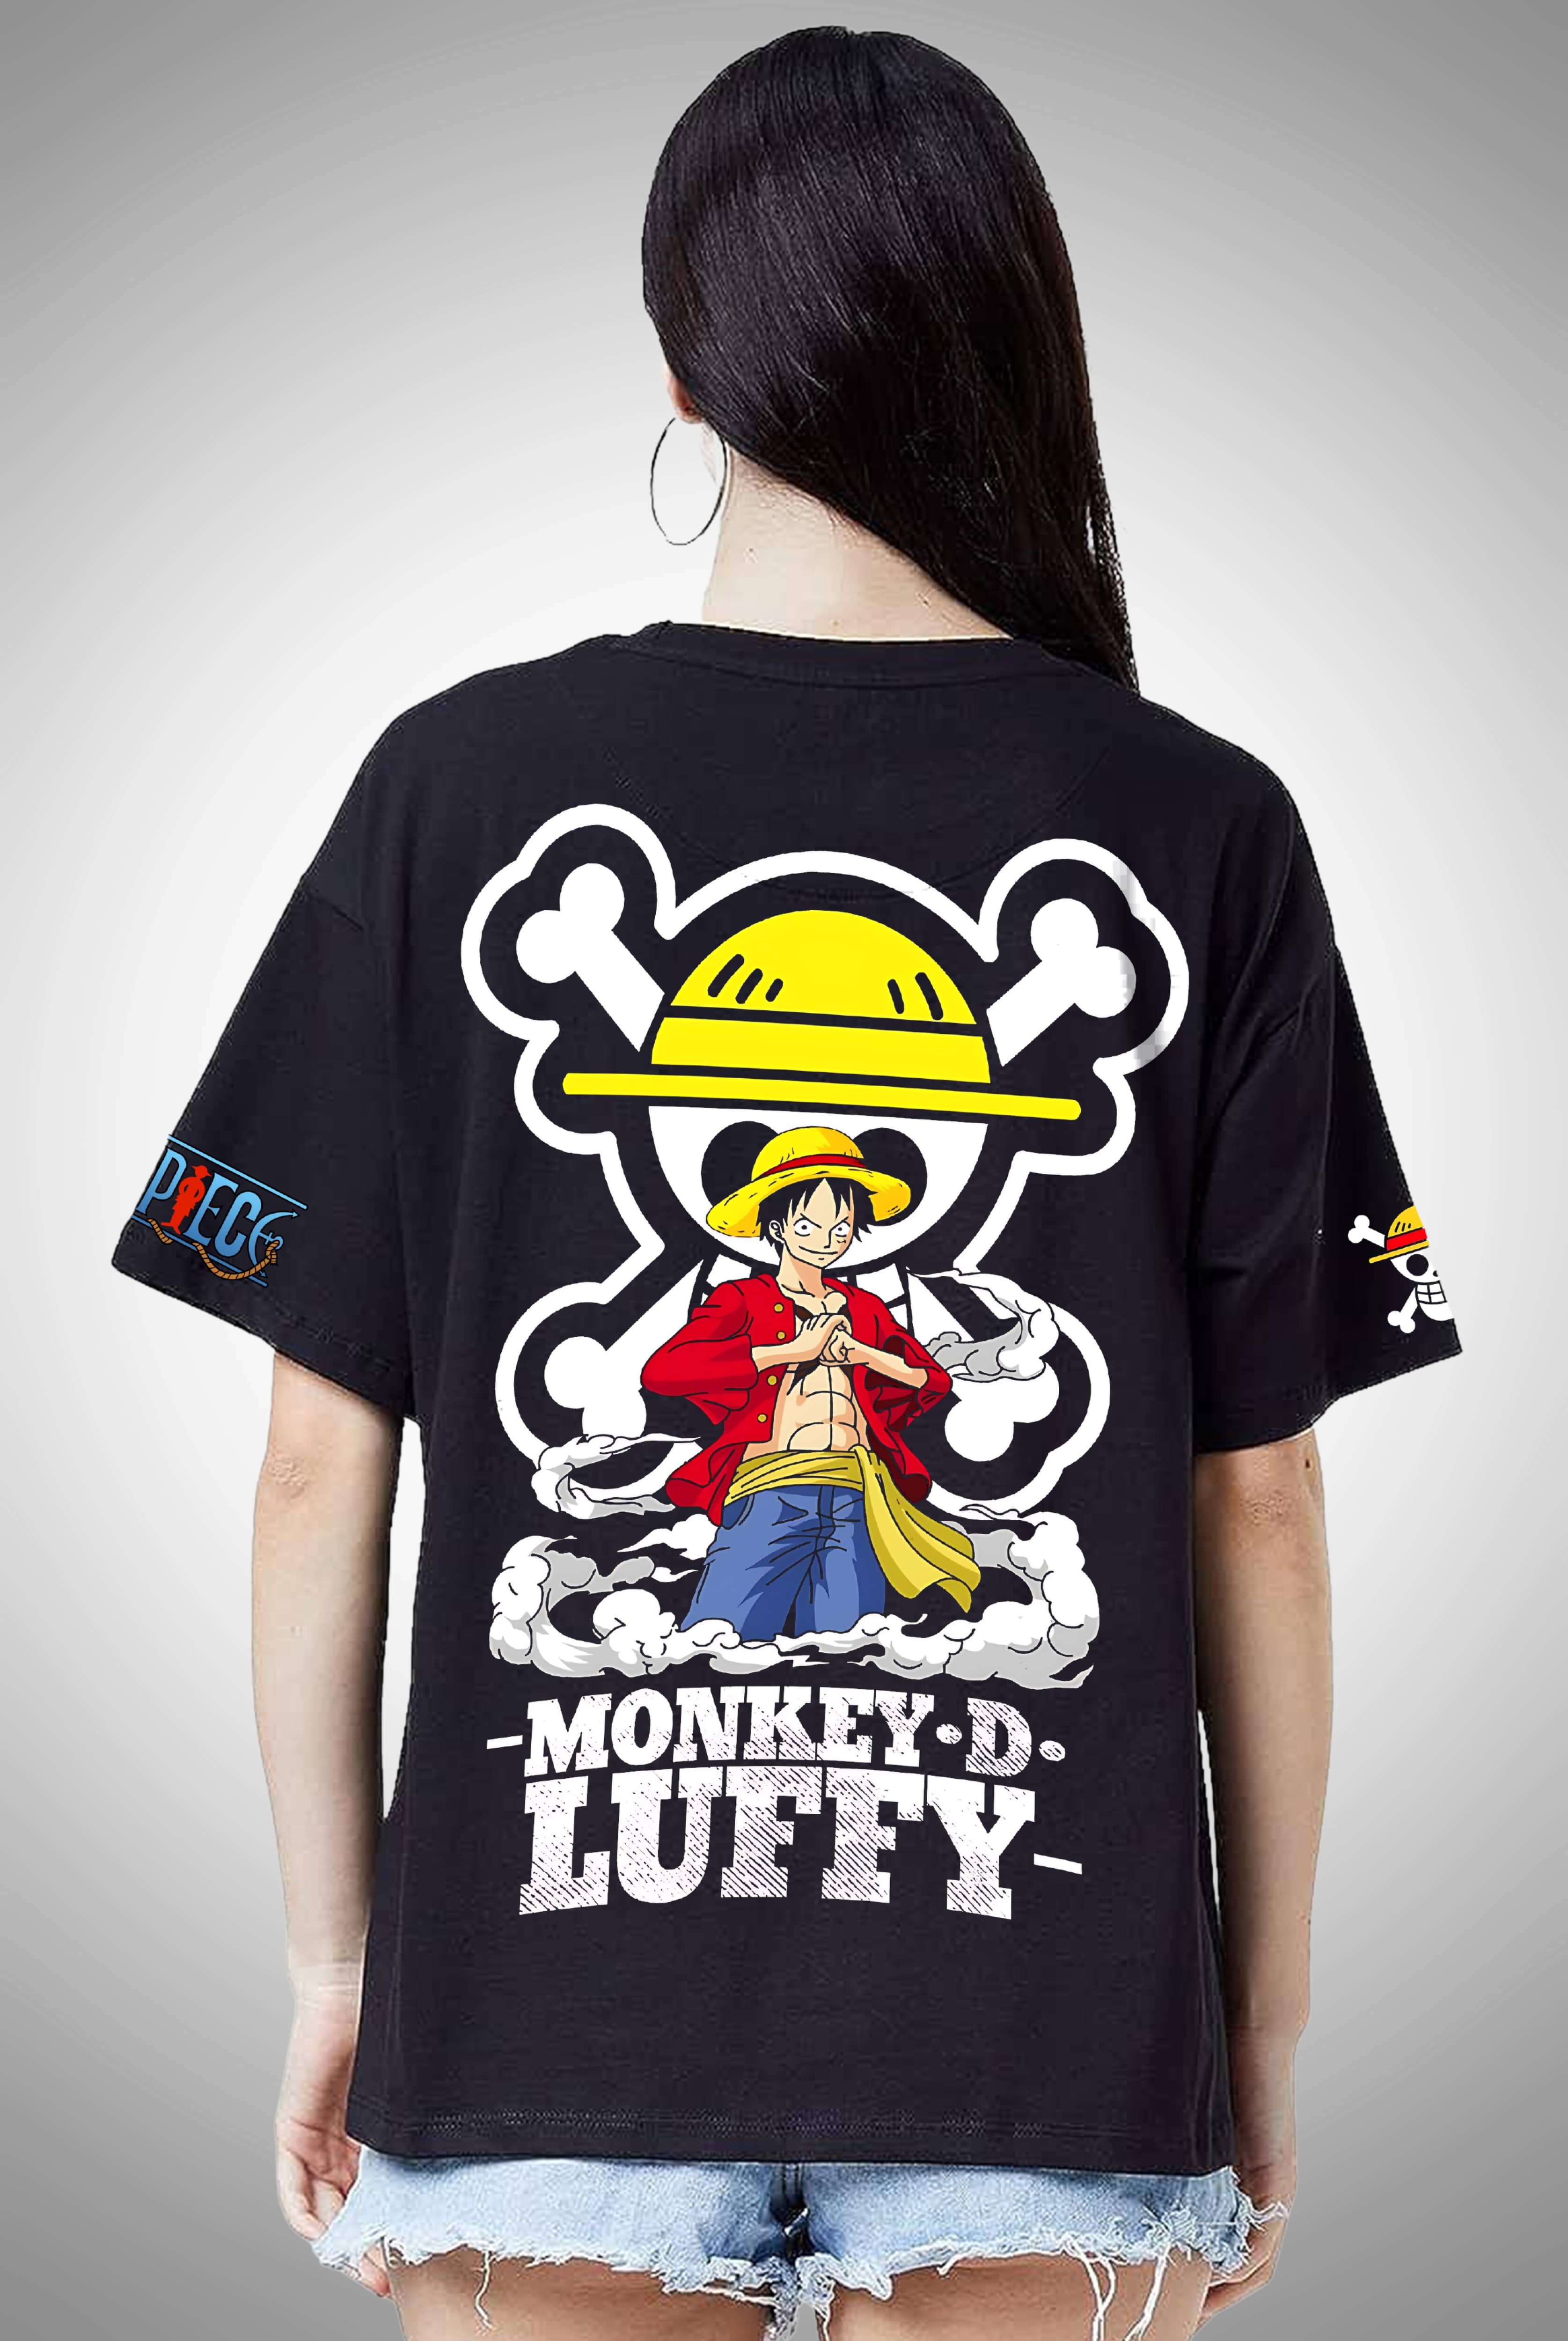 Monkey D Luffy 3 Women's Oversized Anime T-Shirt